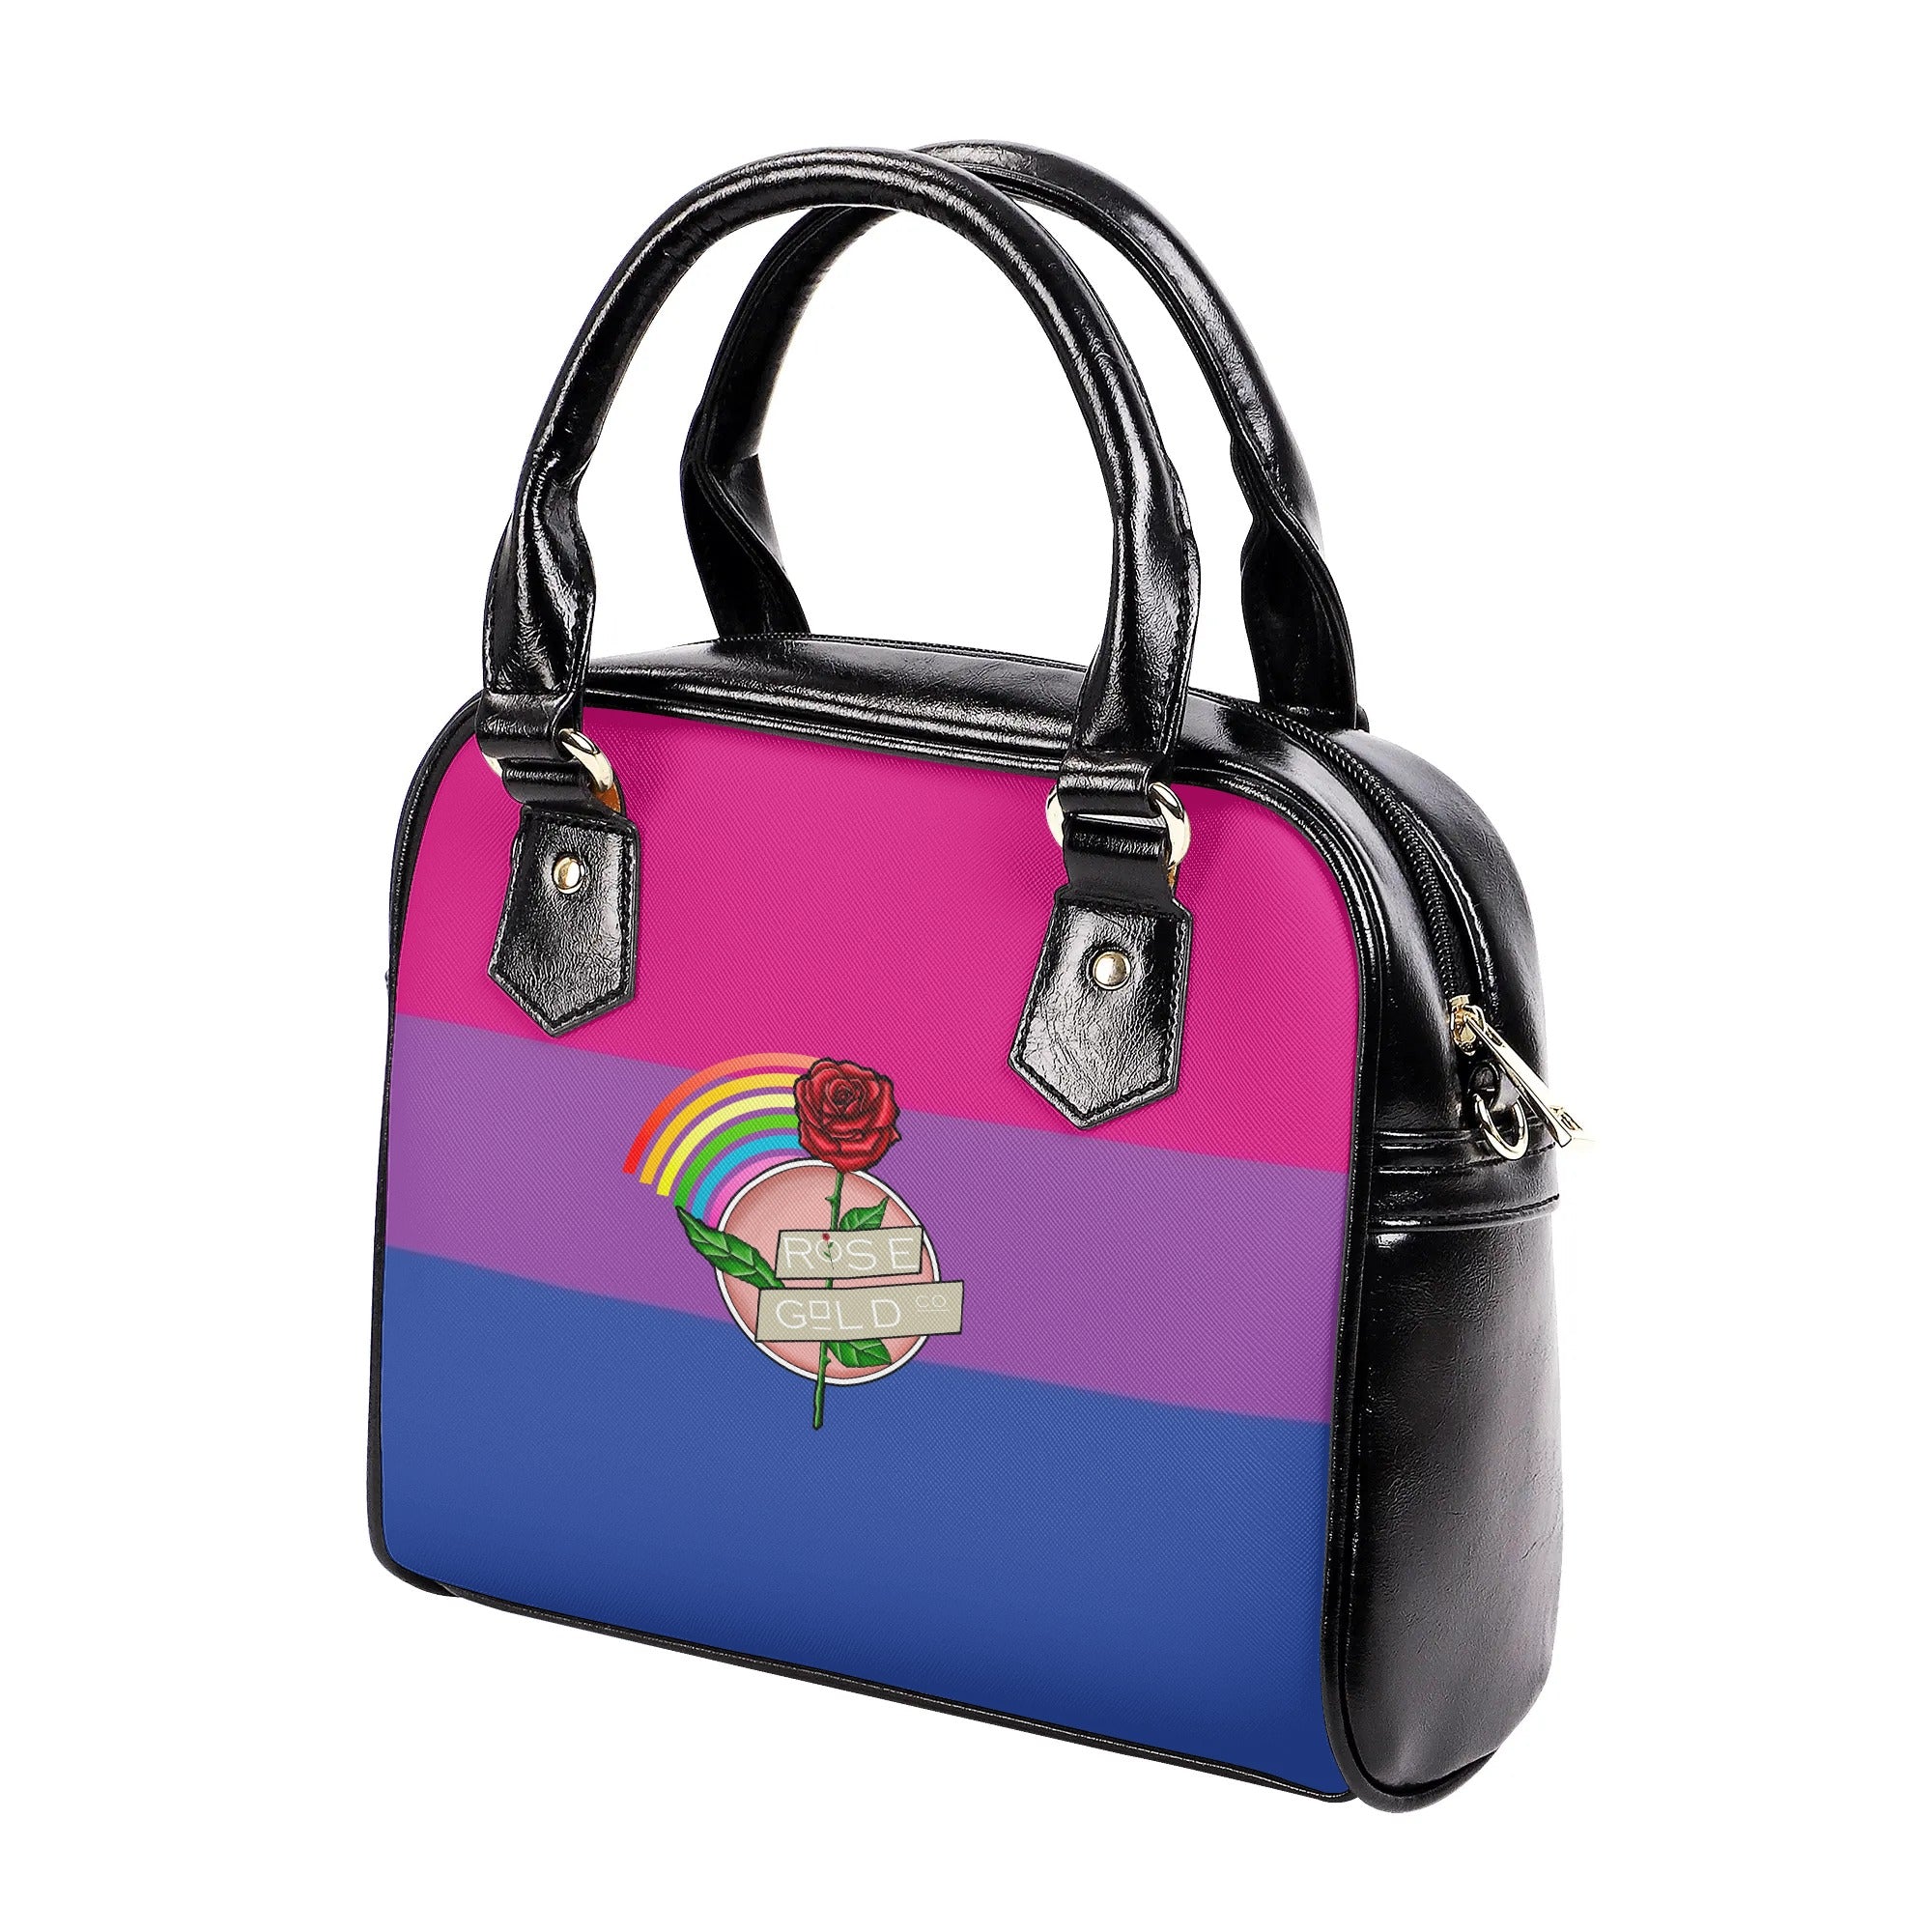 Bisexual Pride Handbag - Rose Gold Co. Shop